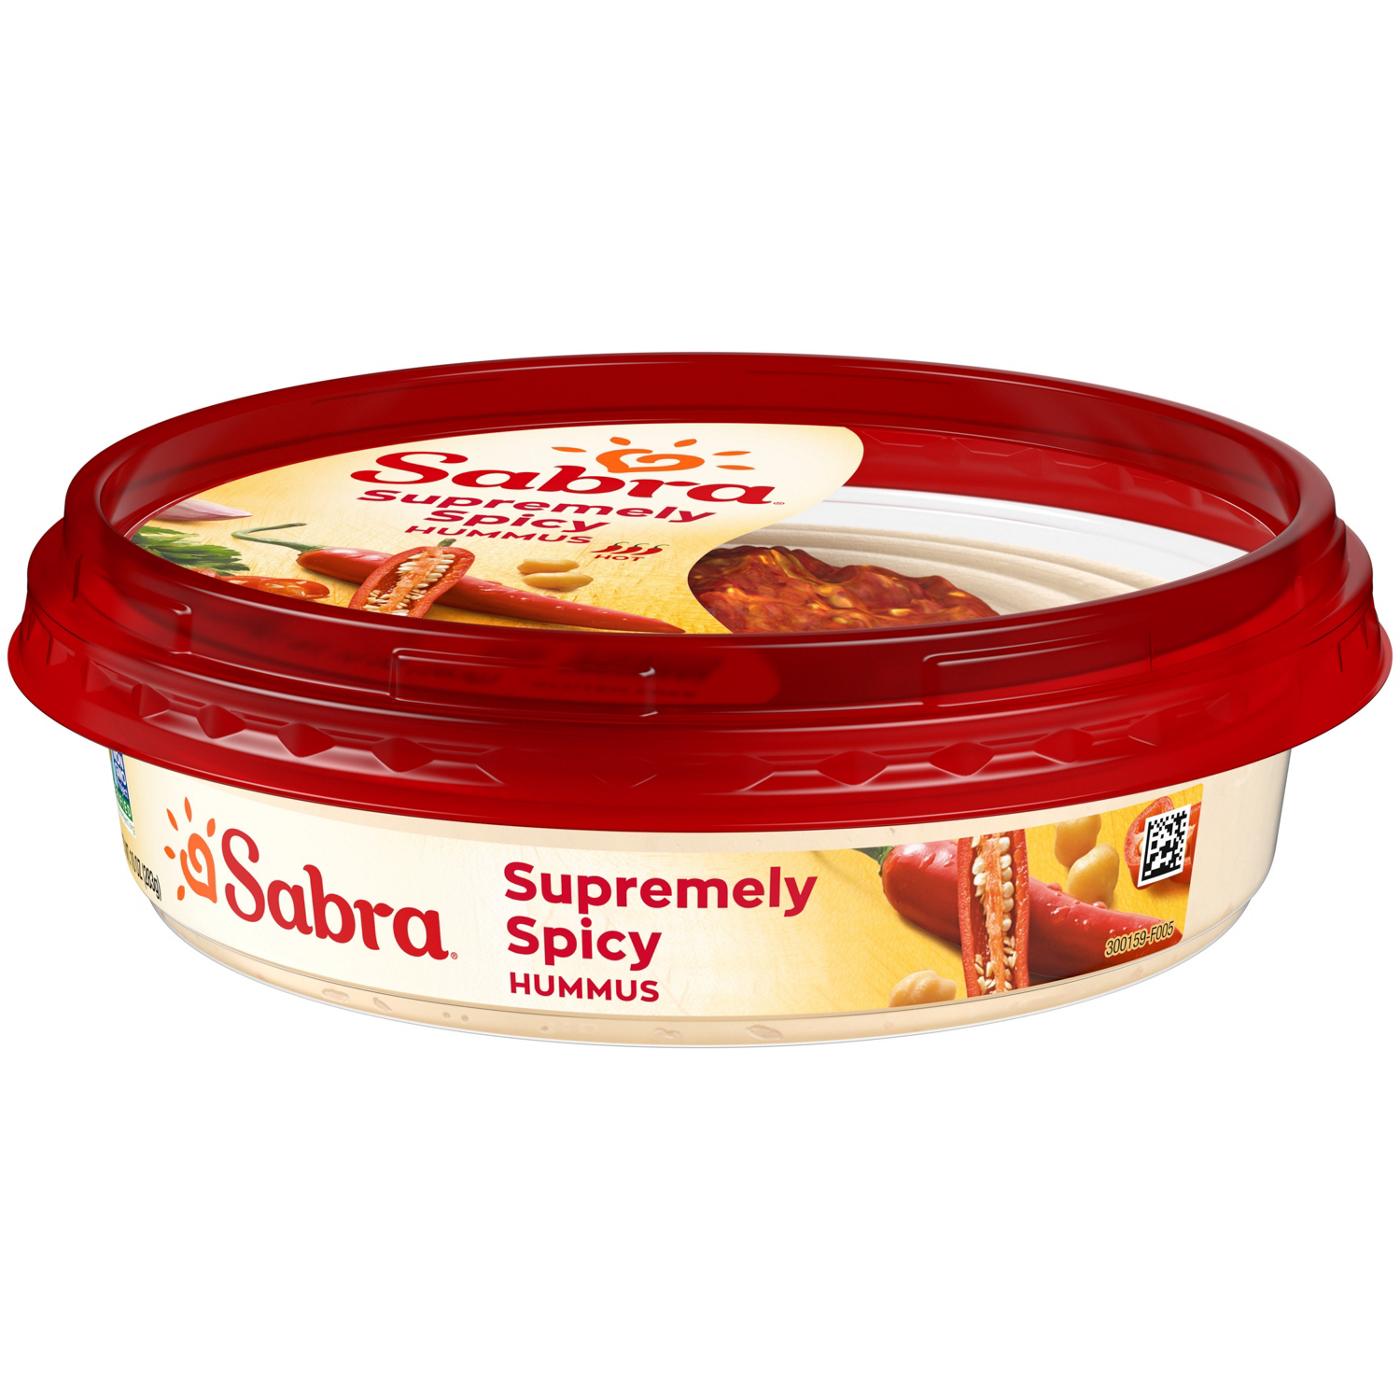 Sabra Supremely Spicy Hummus; image 2 of 3